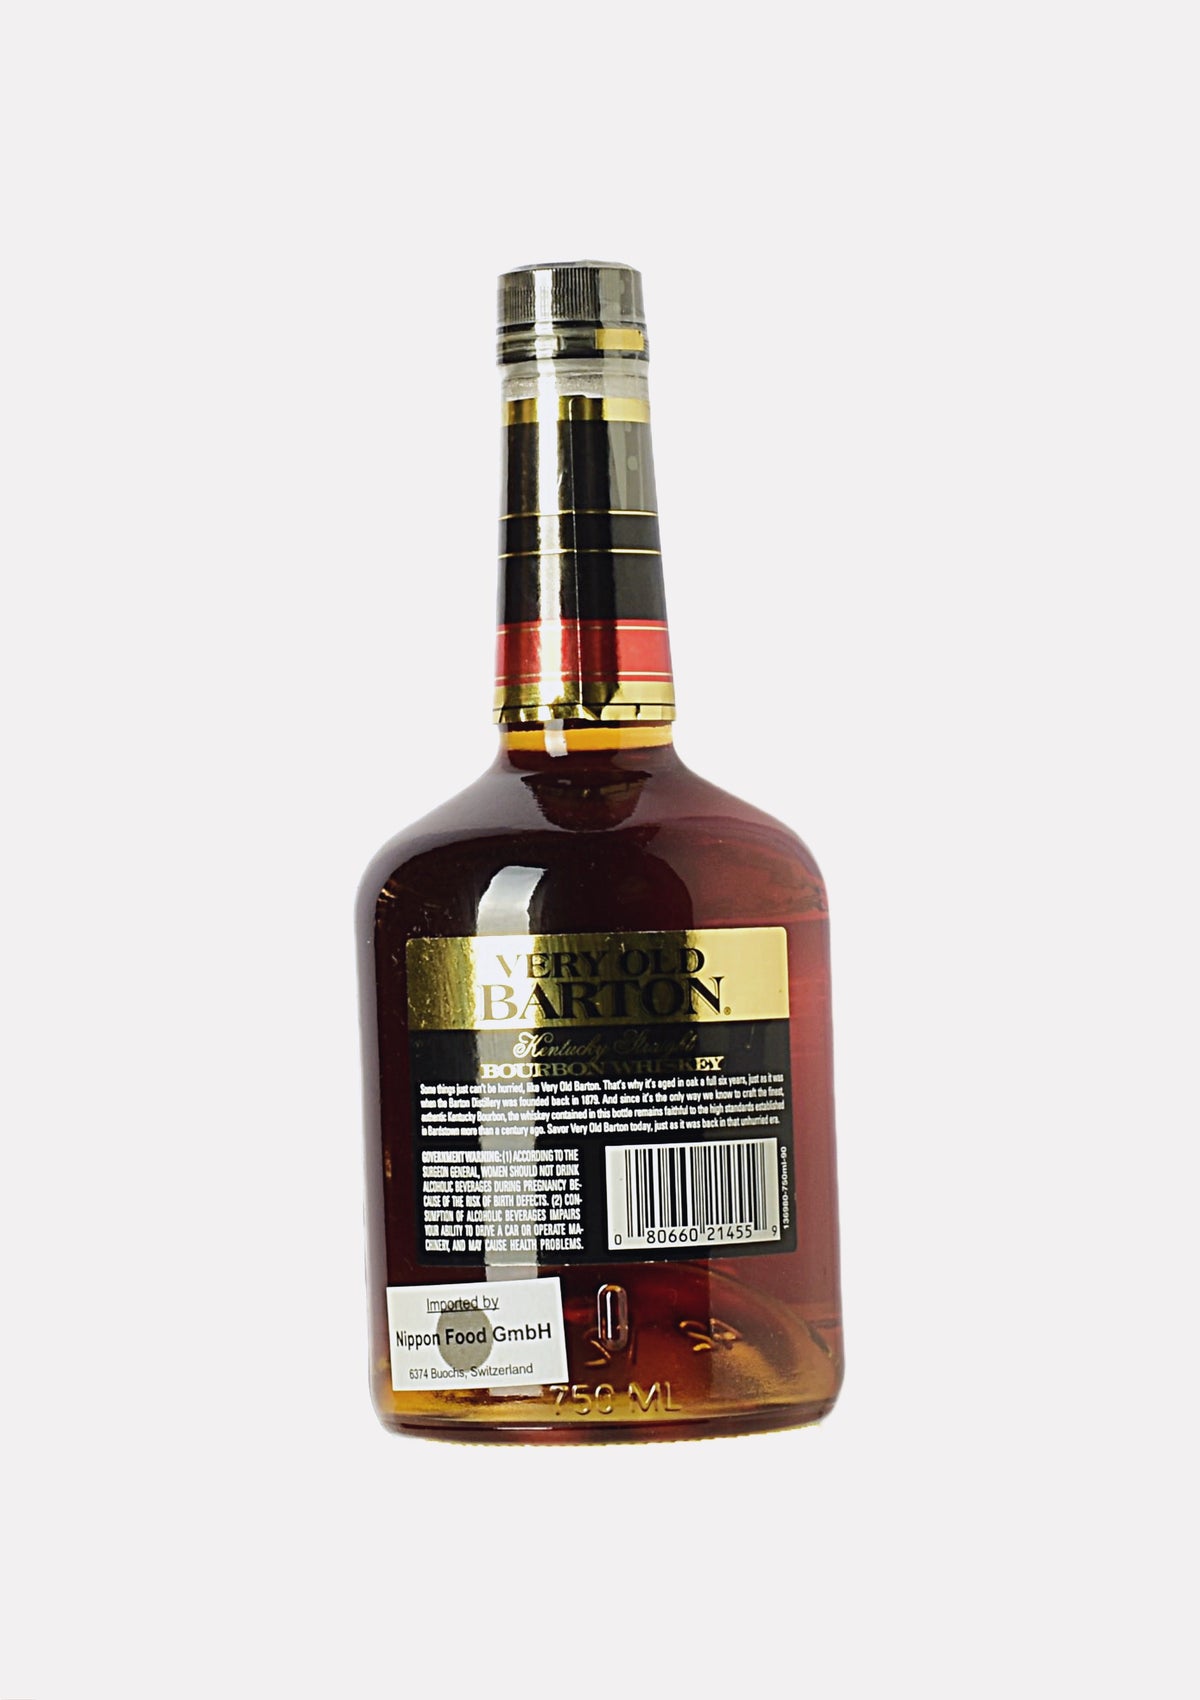 Very Old Barton Kentucky Straight Bourbon Whiskey 6 Jahre